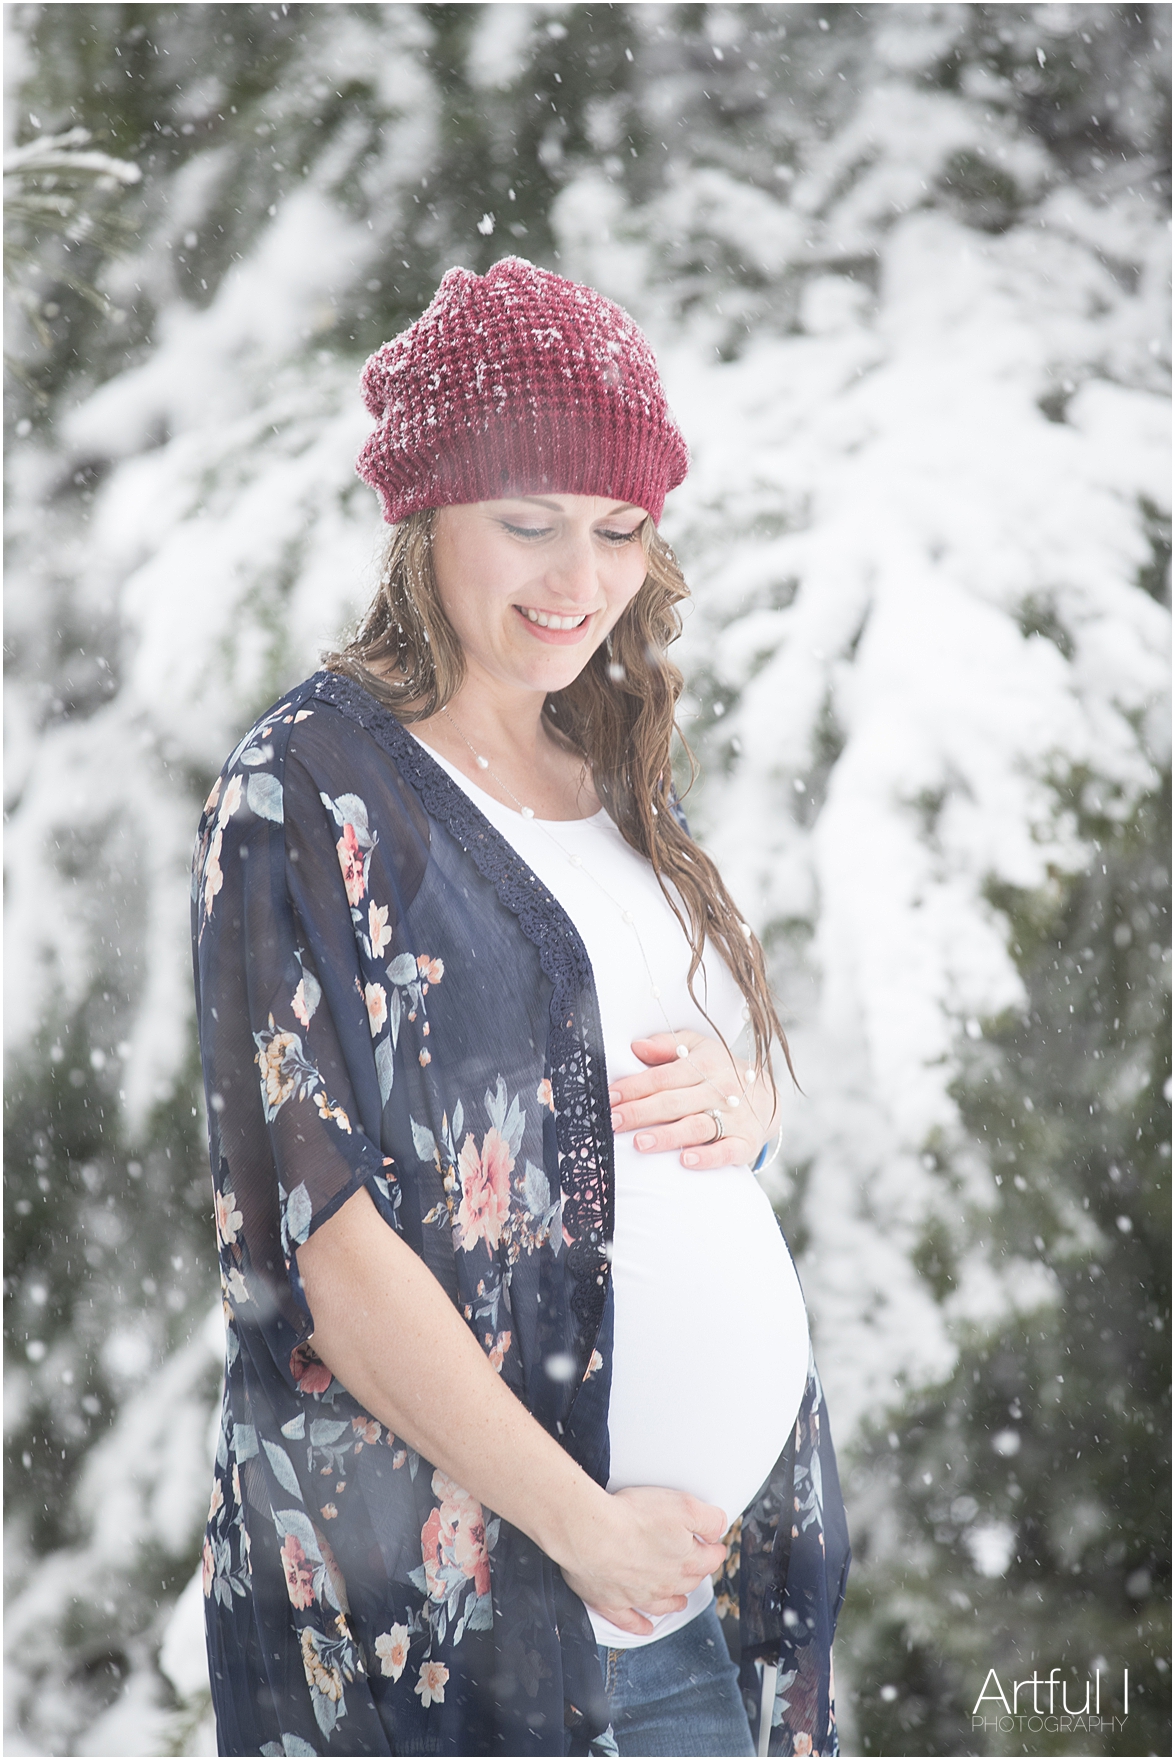 Dan & Kristy | A Spring Maternity Shoot – Artful I Photography